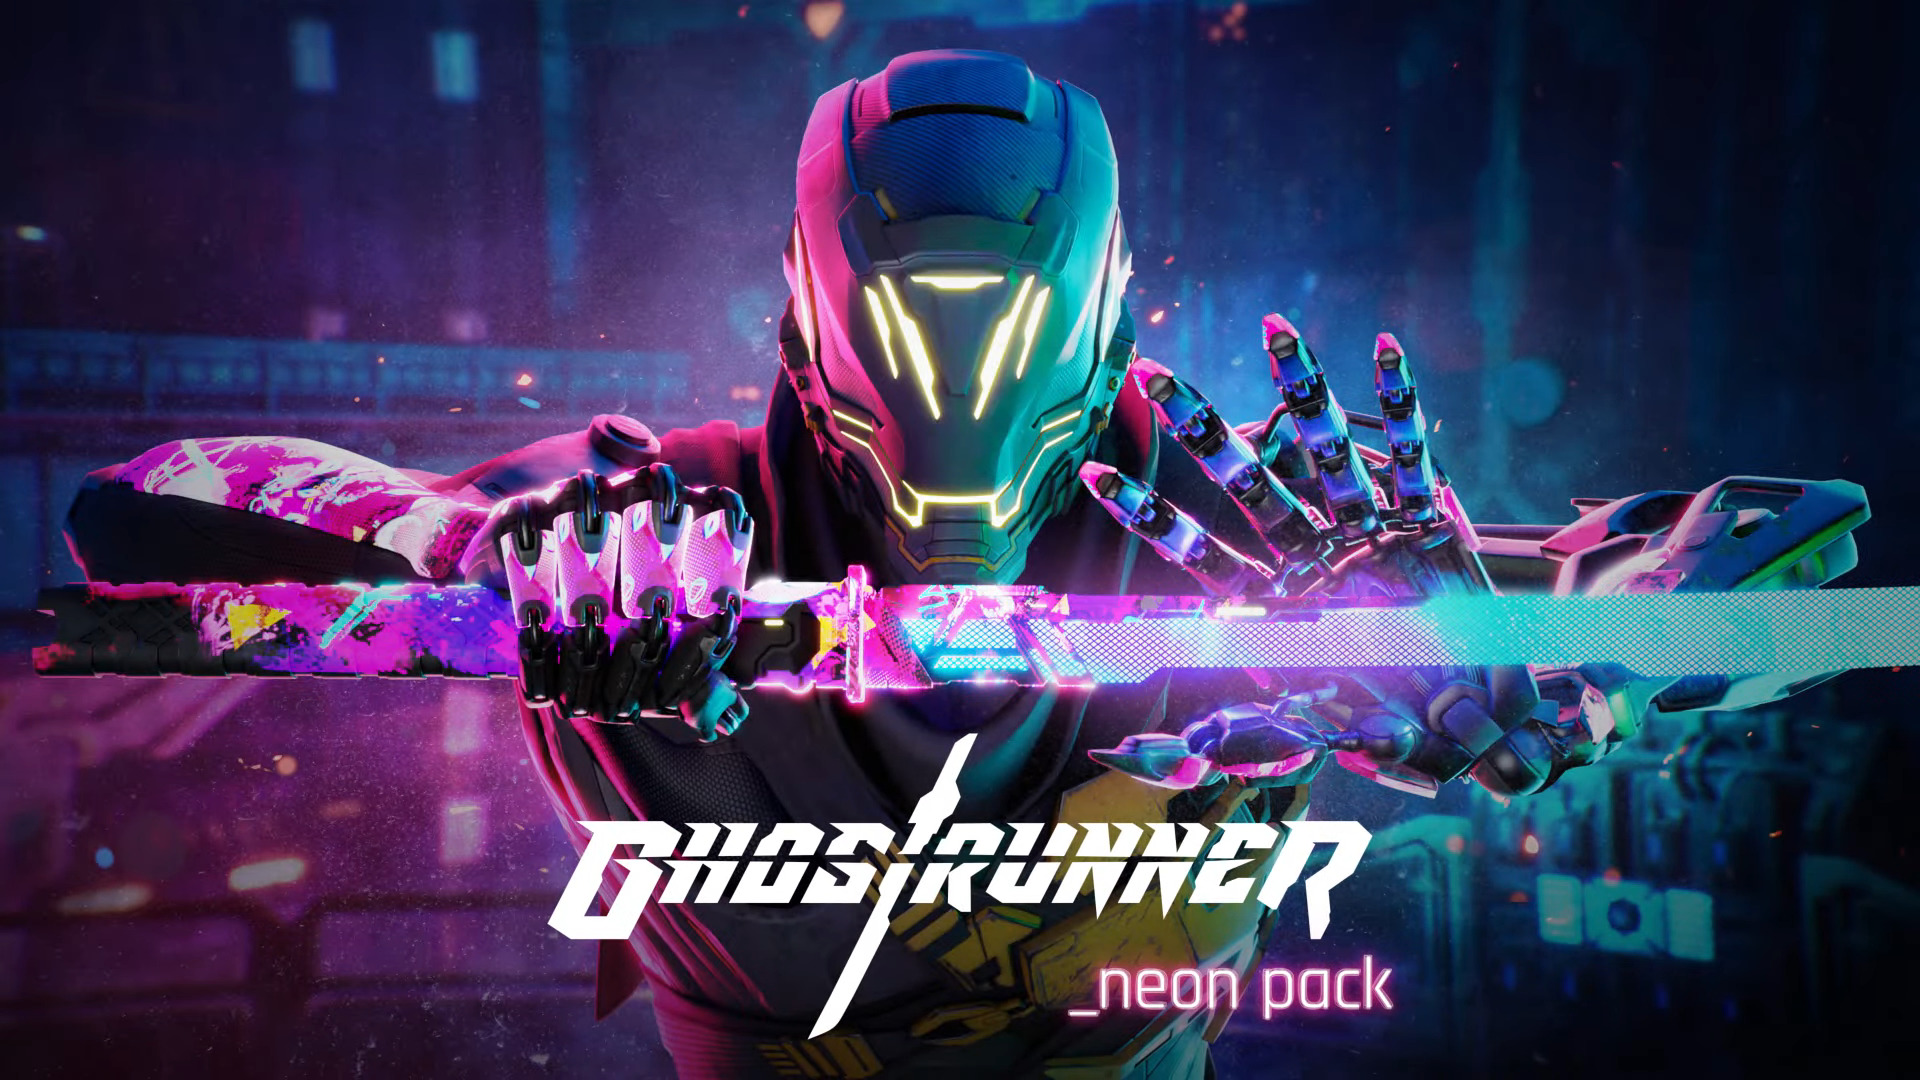 Ghostrunner เพิ่มโหมดใหม่และ Neon Pack